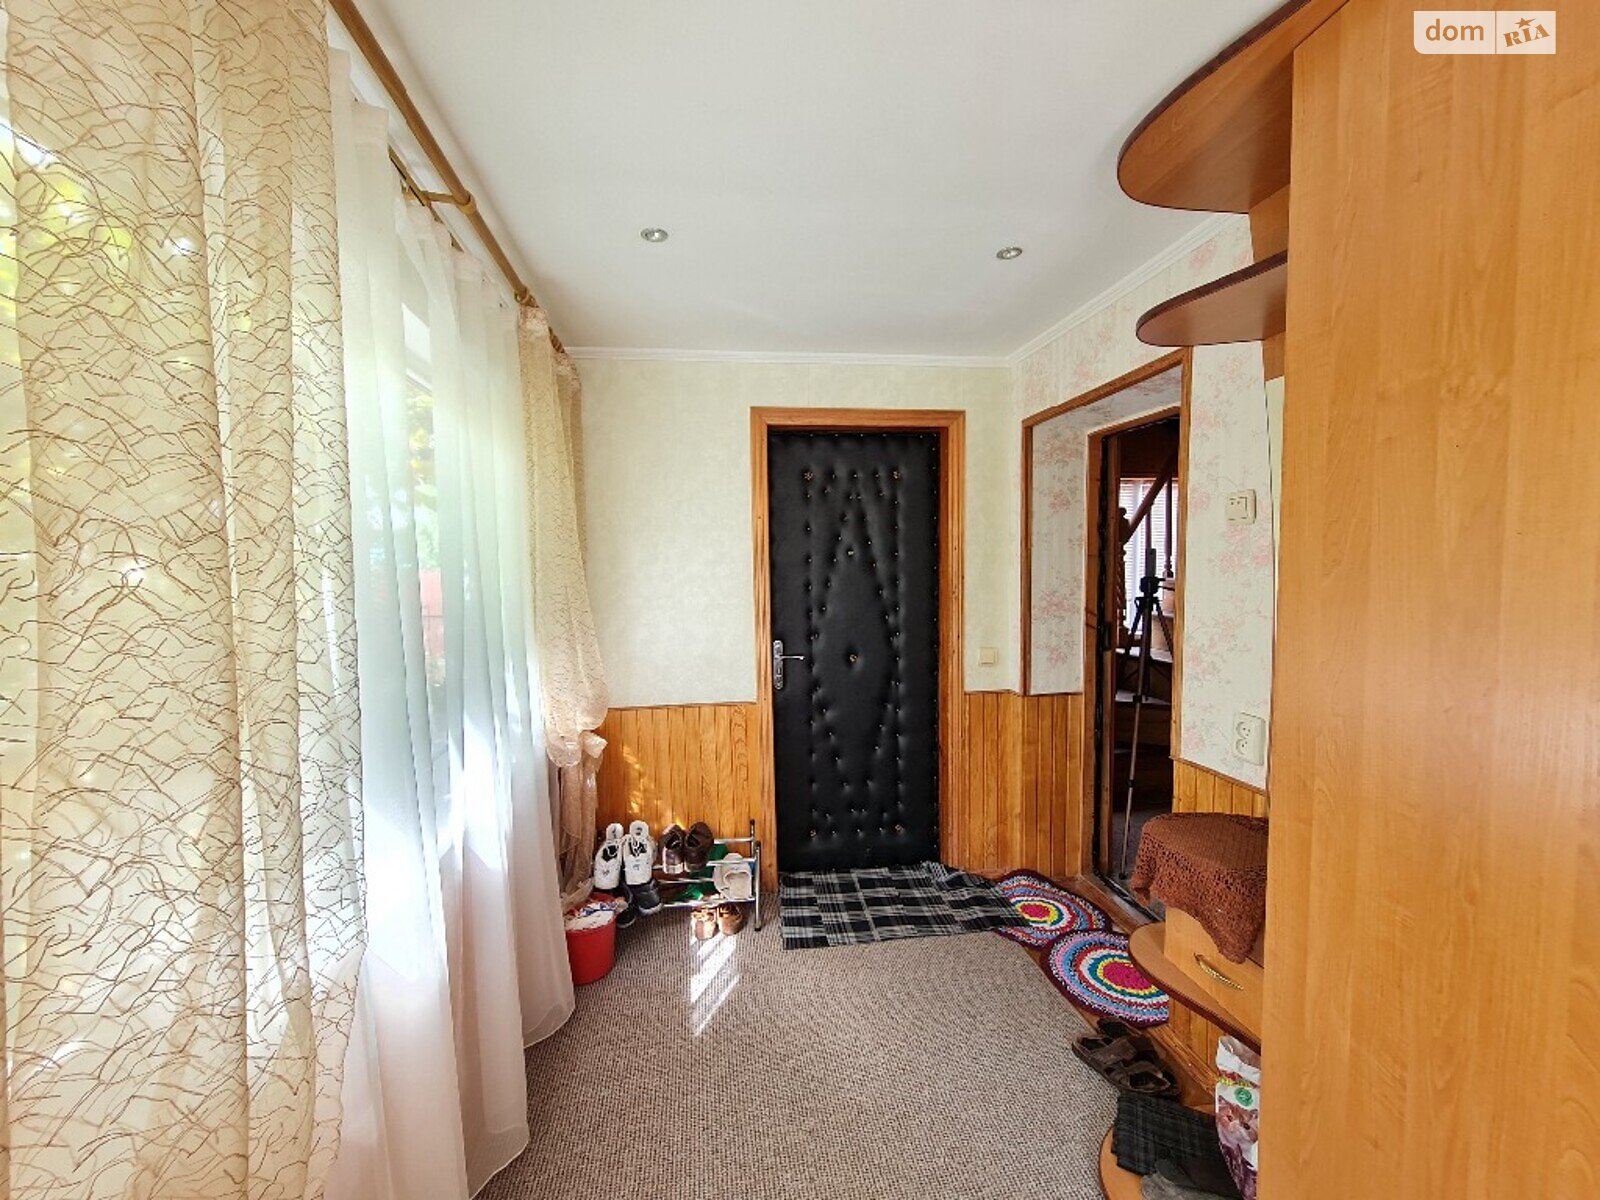 двоповерховий будинок веранда, 92.2 кв. м, цегла. Продаж в Хмельницькому, район Дубове фото 1